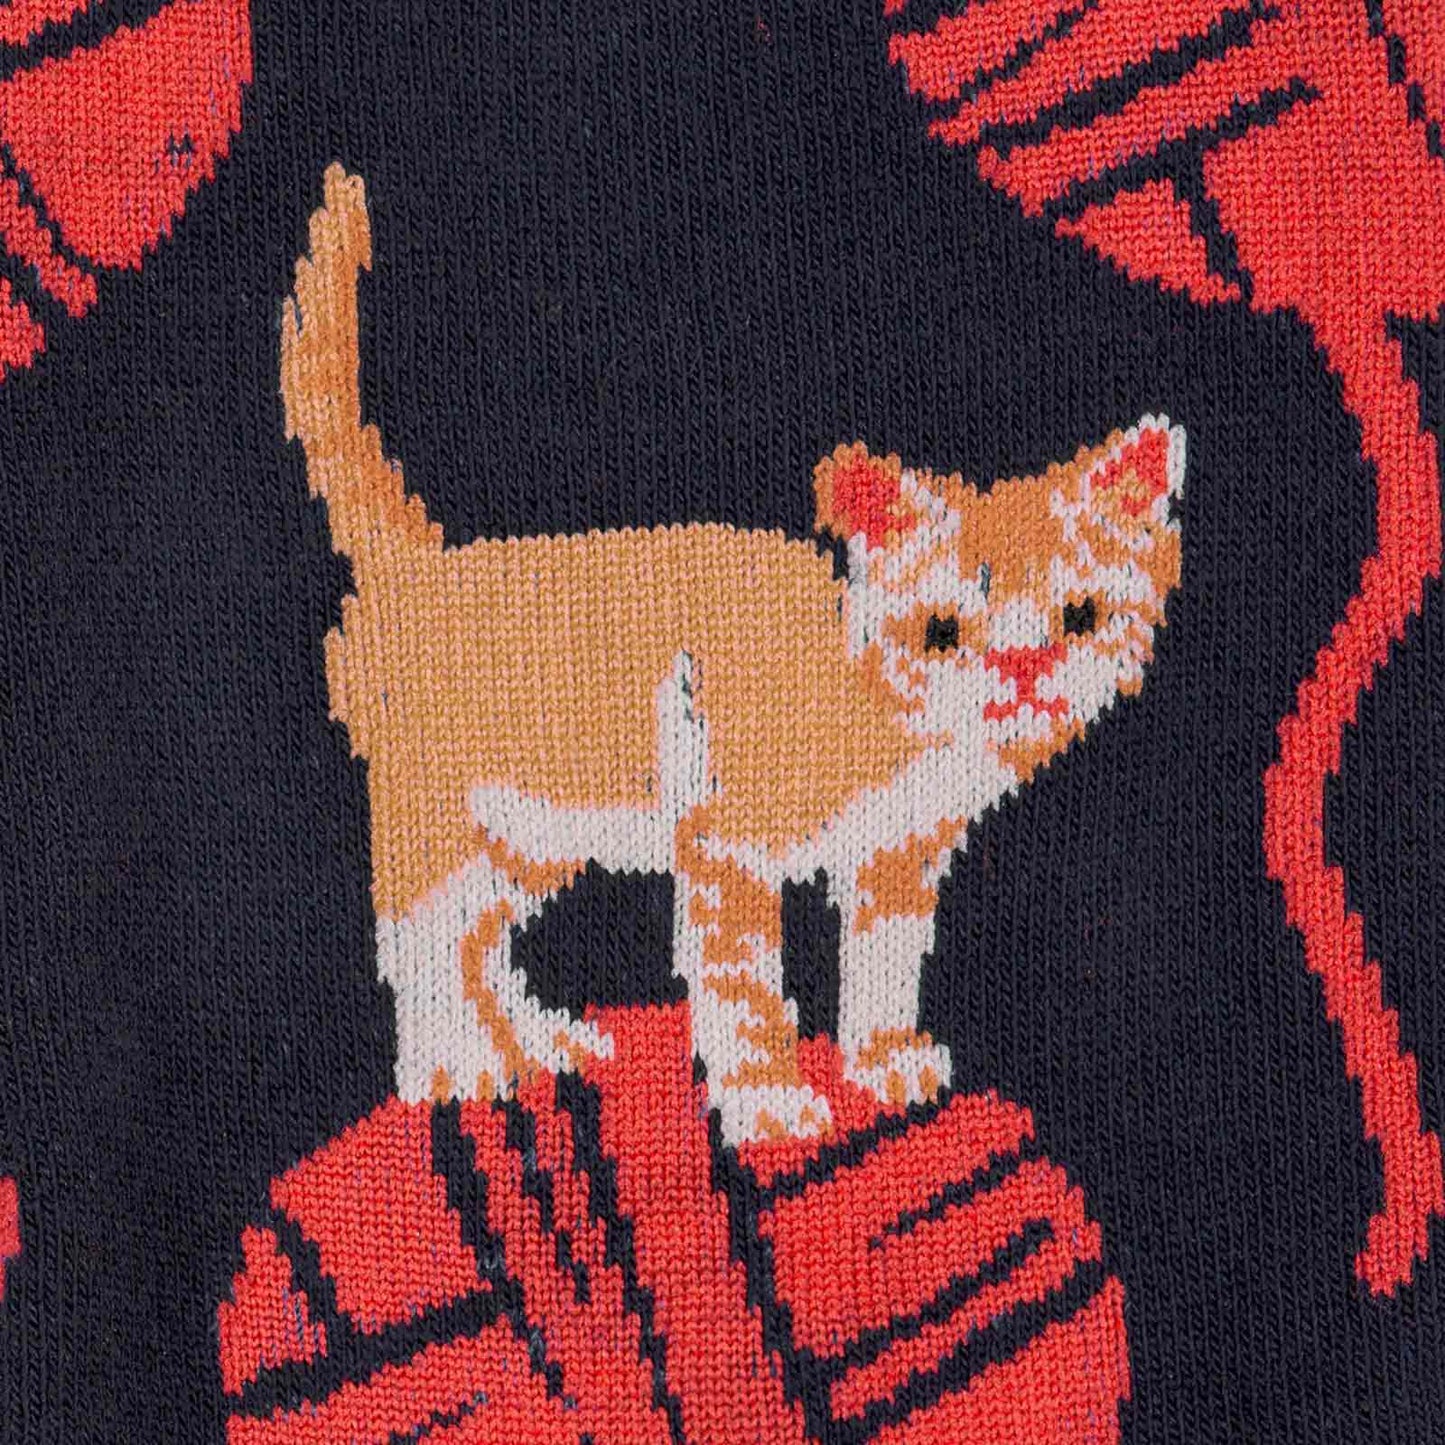 Sock It To Me Women's Crew Socks - Kitten Knittin'